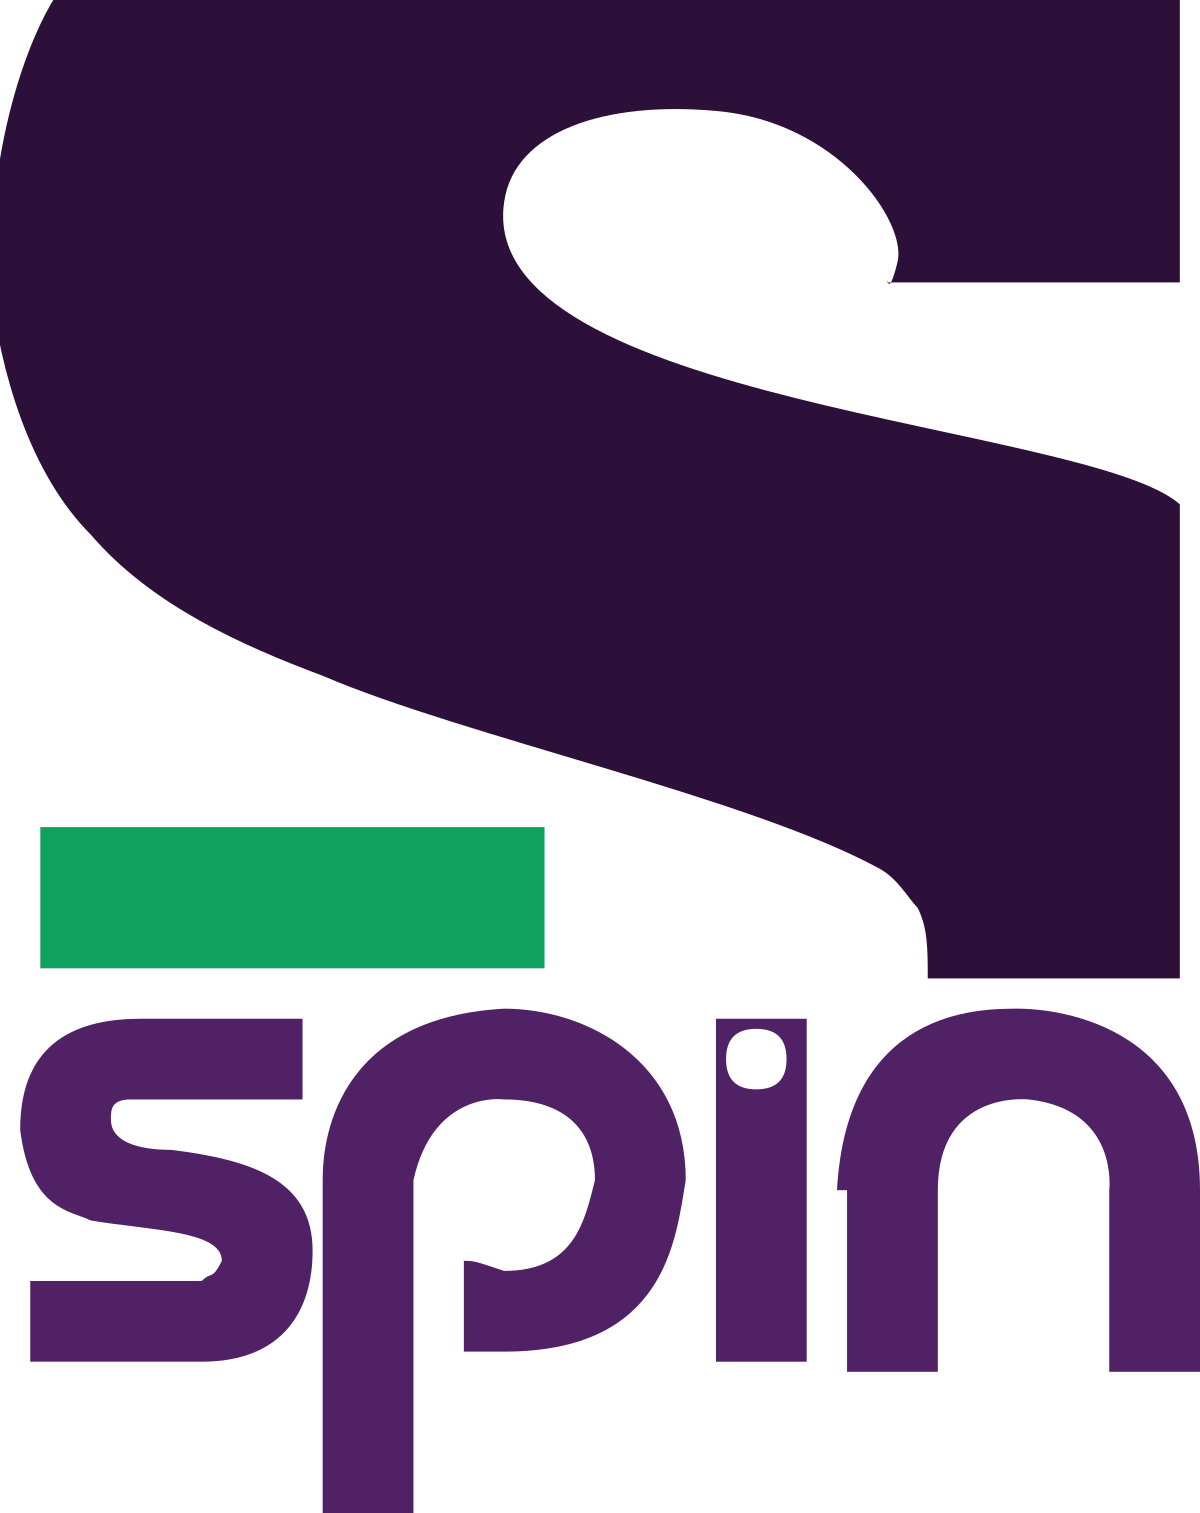 Sony Spin (1200x1513)